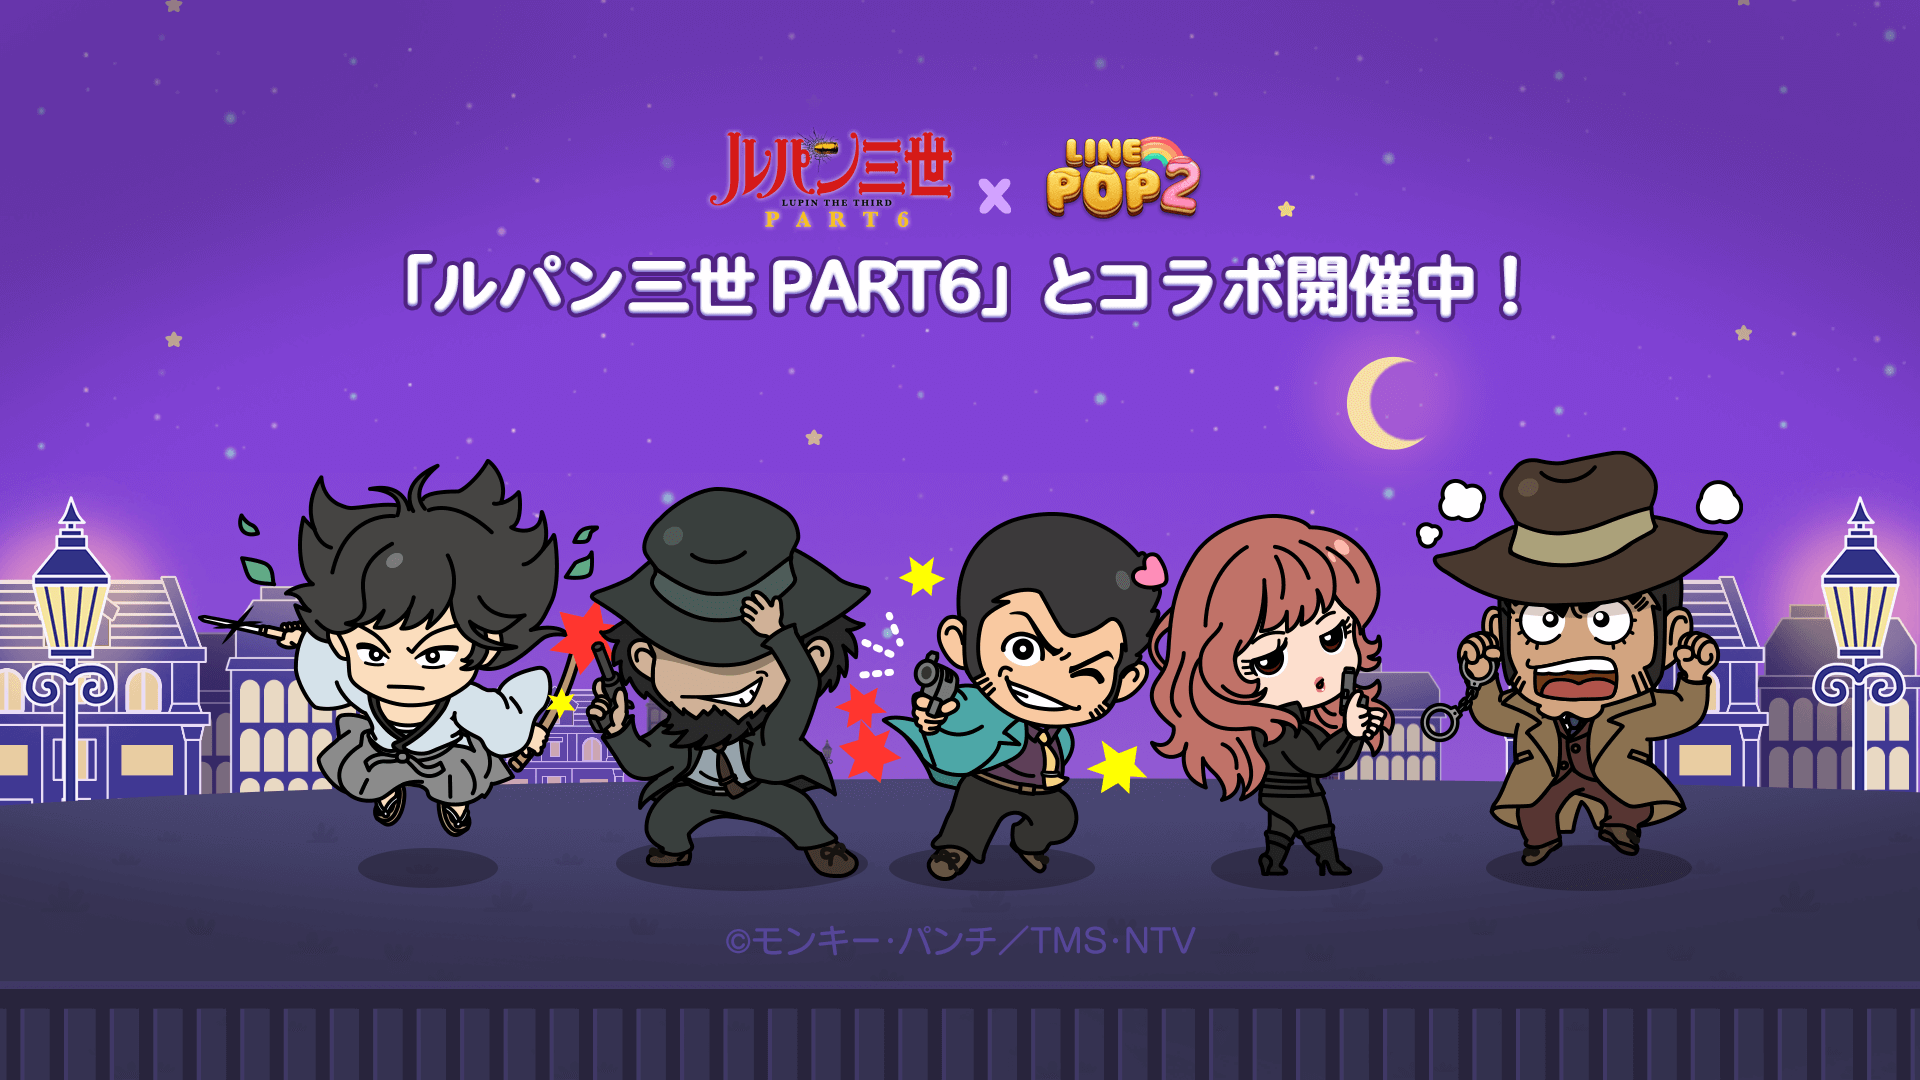 Line Pop2 Tvアニメ ルパン三世 Part6 コラボイベントが開催